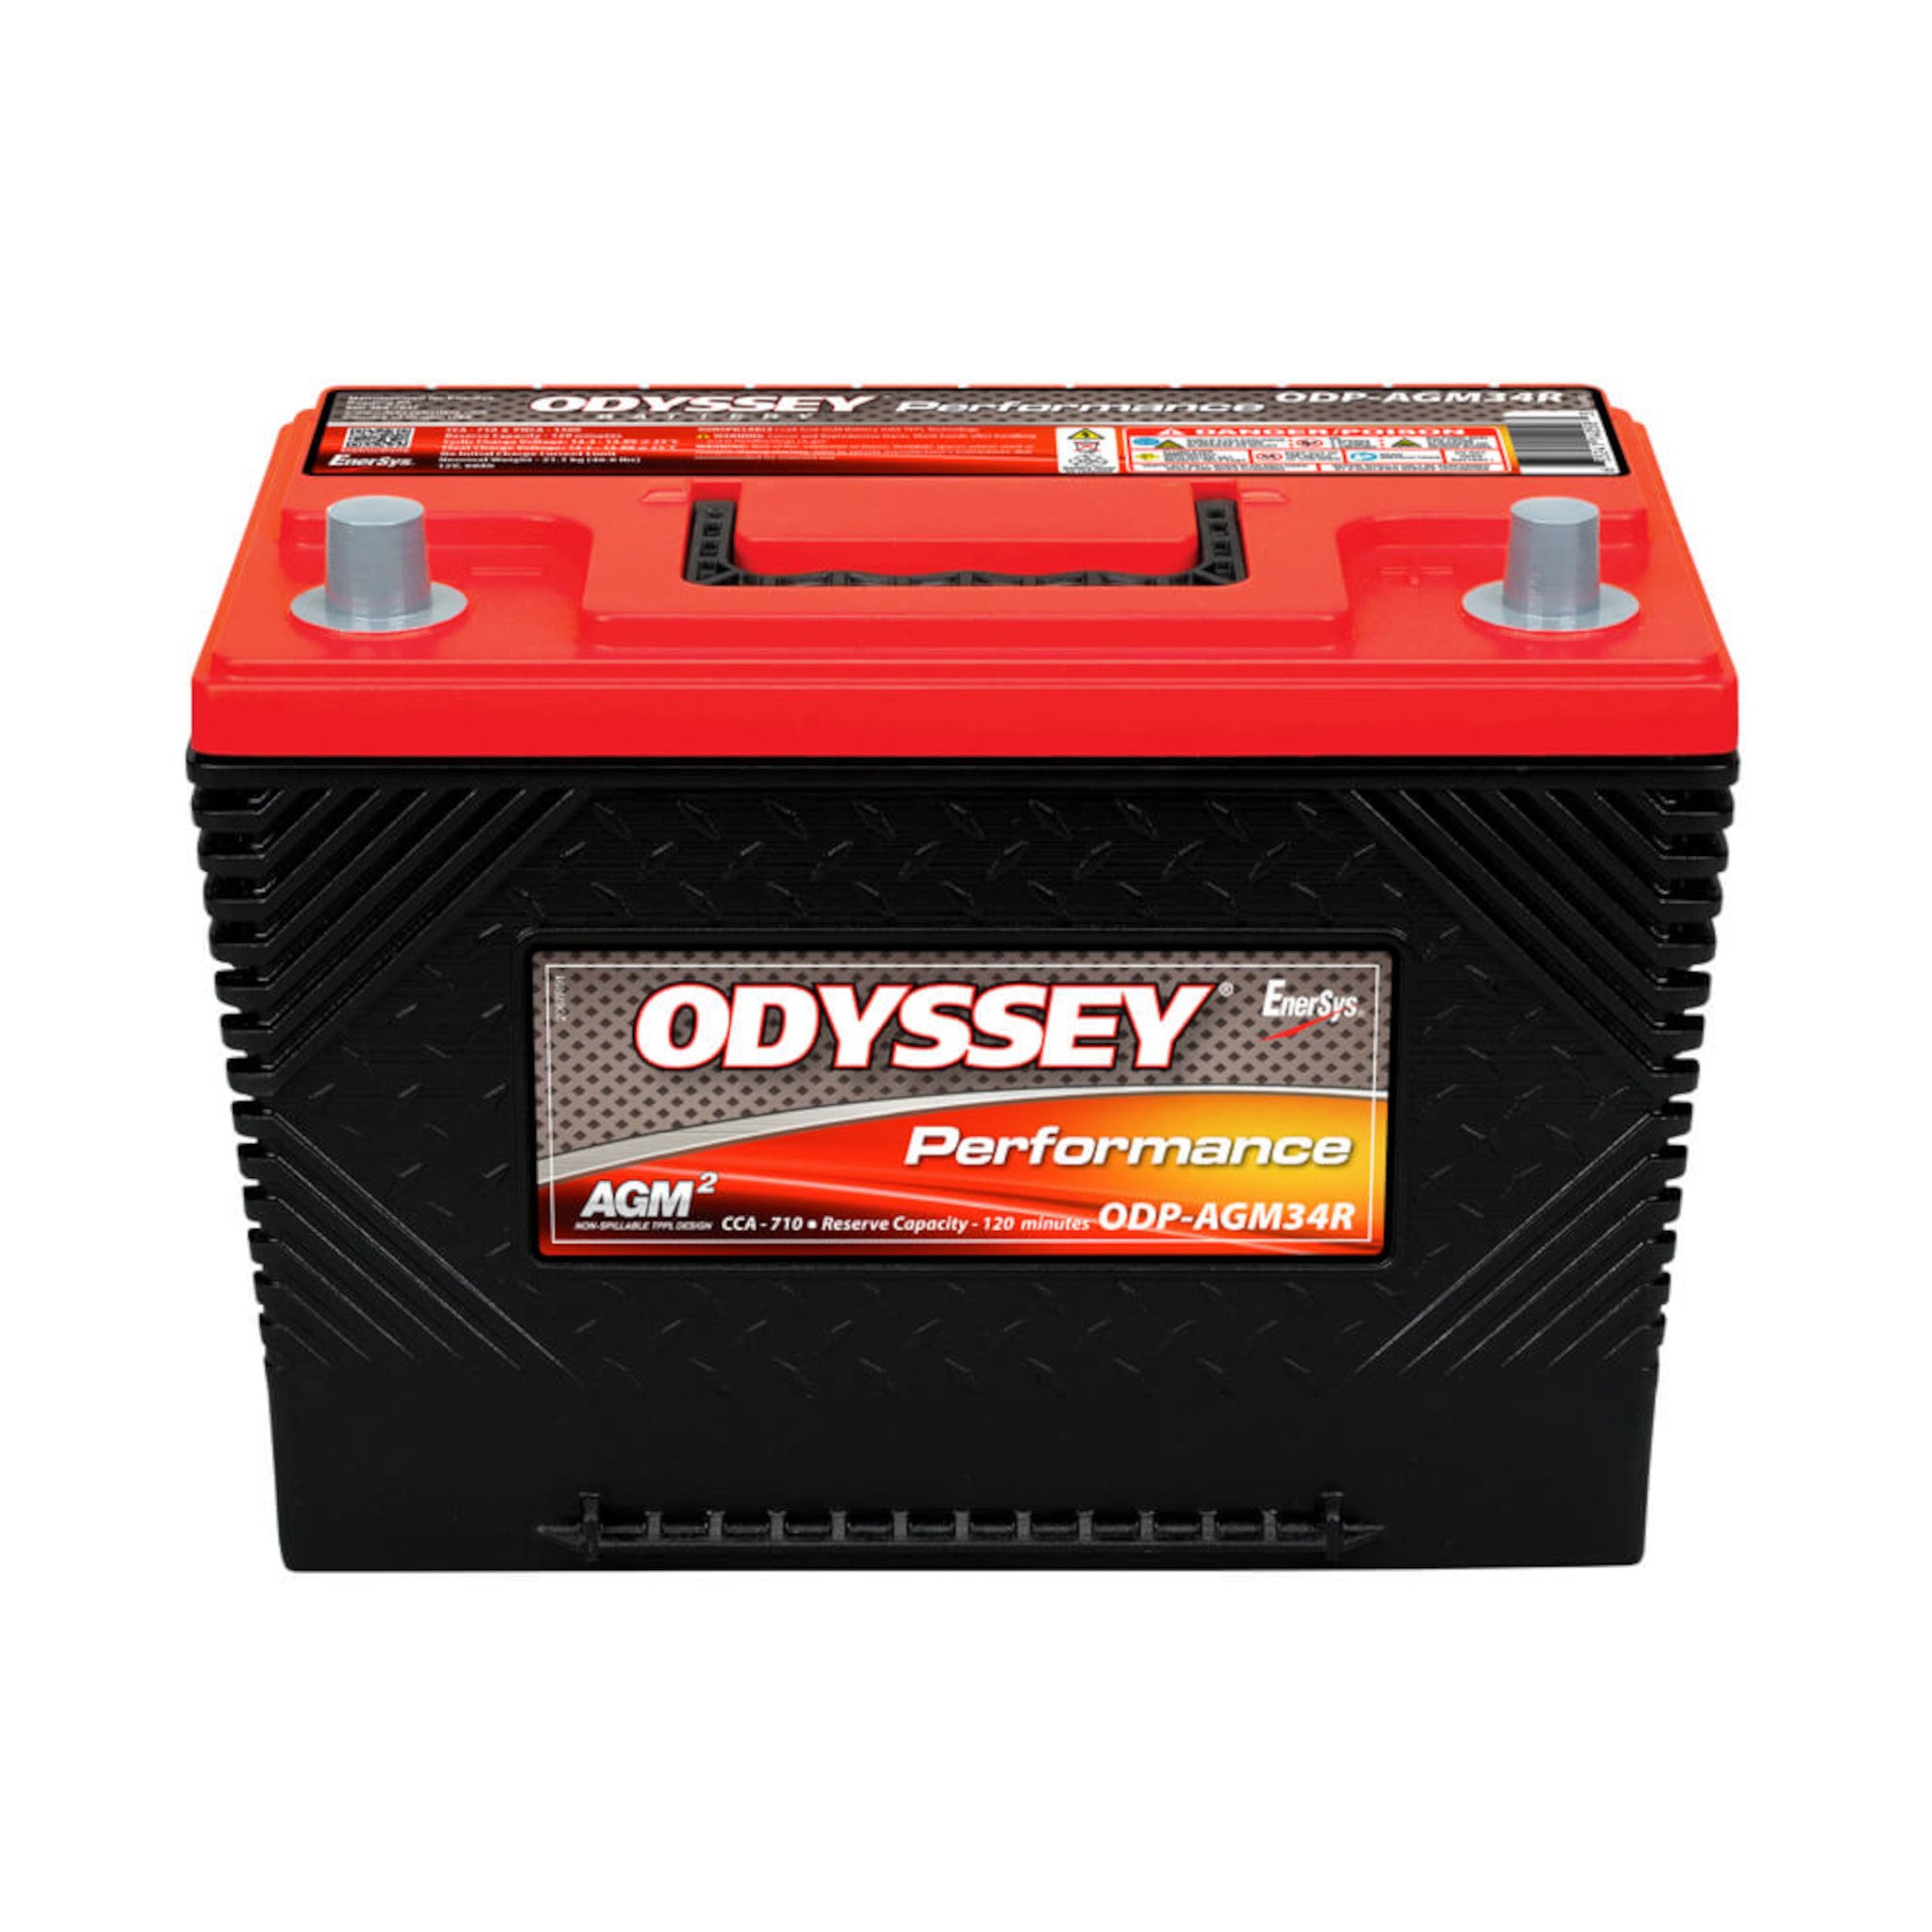 Odyssey ODP-AGM34R 12V Group 34R AGM Truck Battery